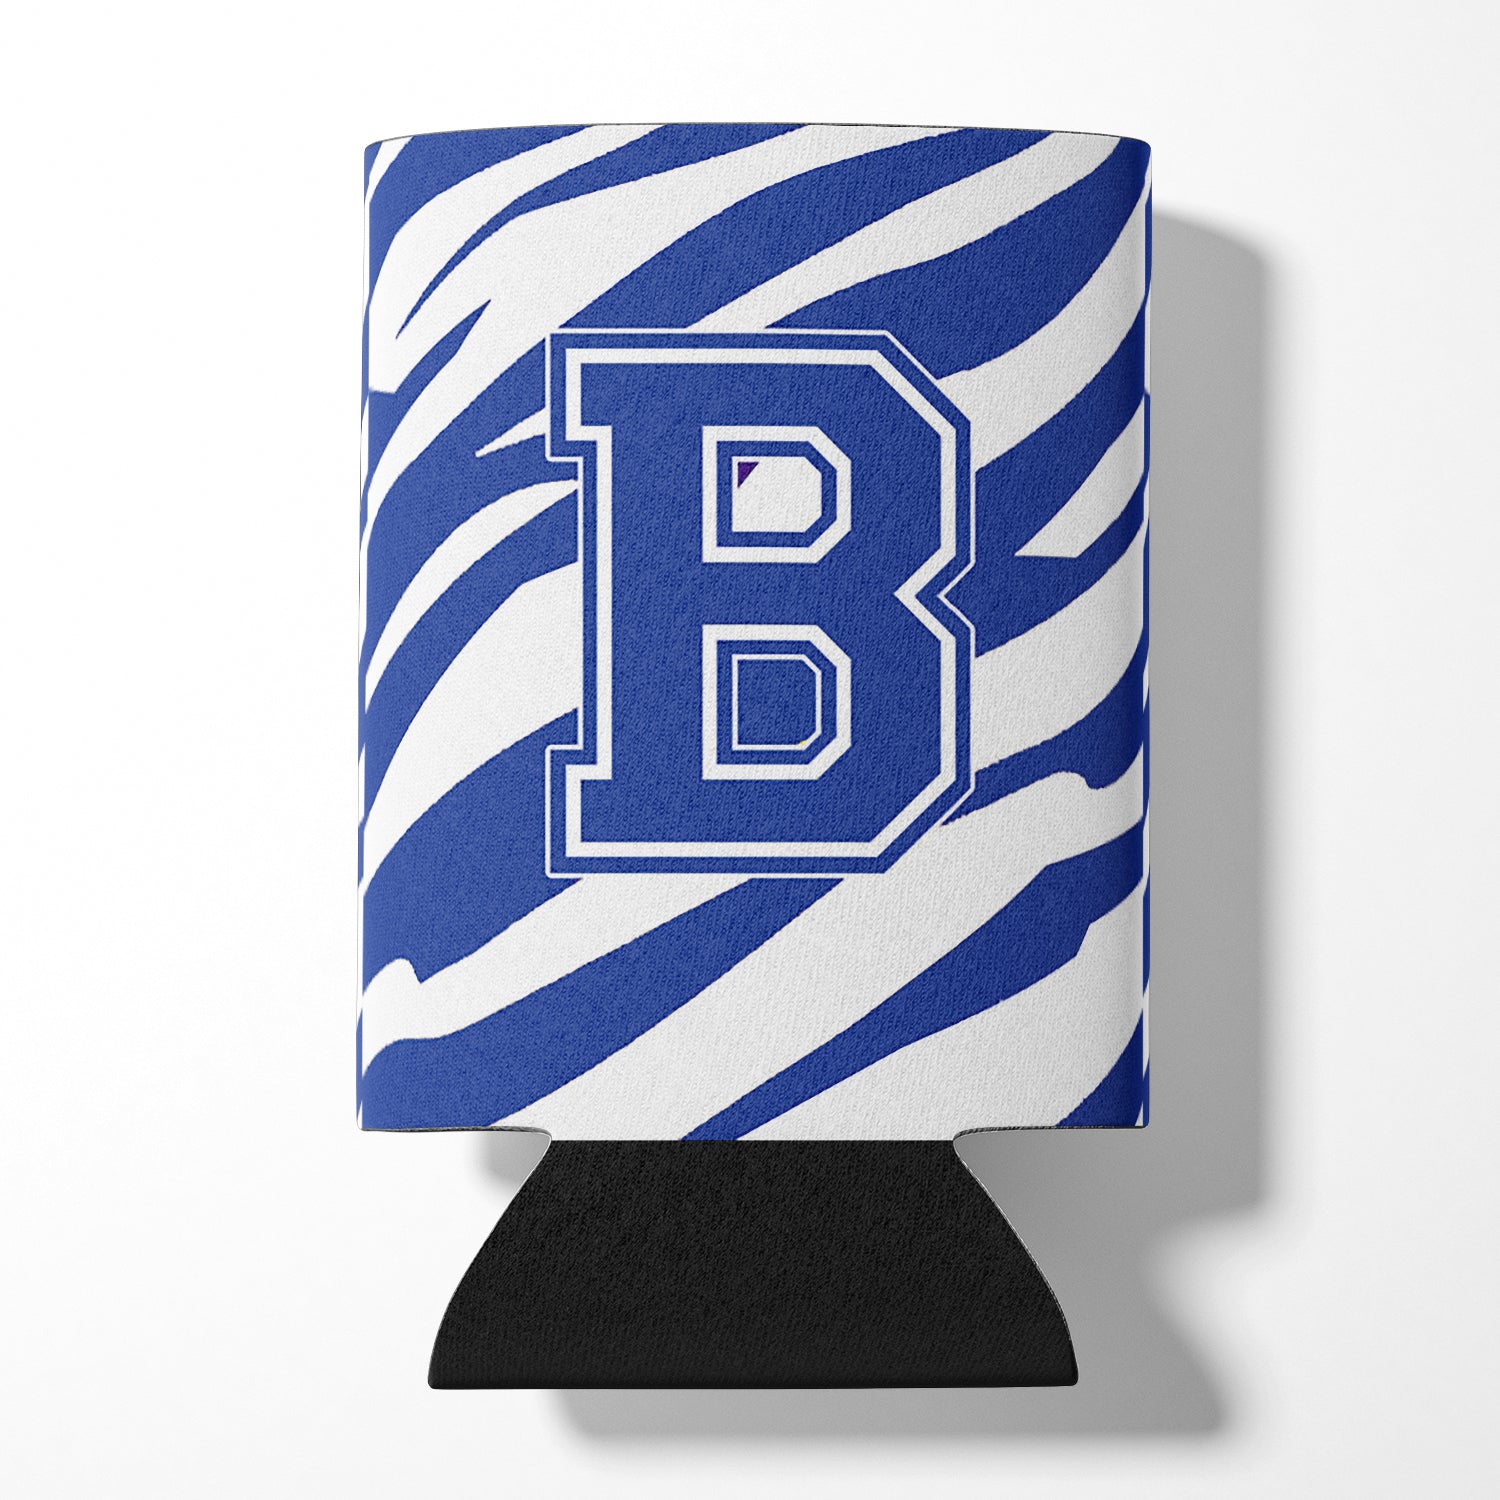 Monogramme initial de la lettre B - Tiger Stripe Blue and White Can Beverage Insulator Hugger